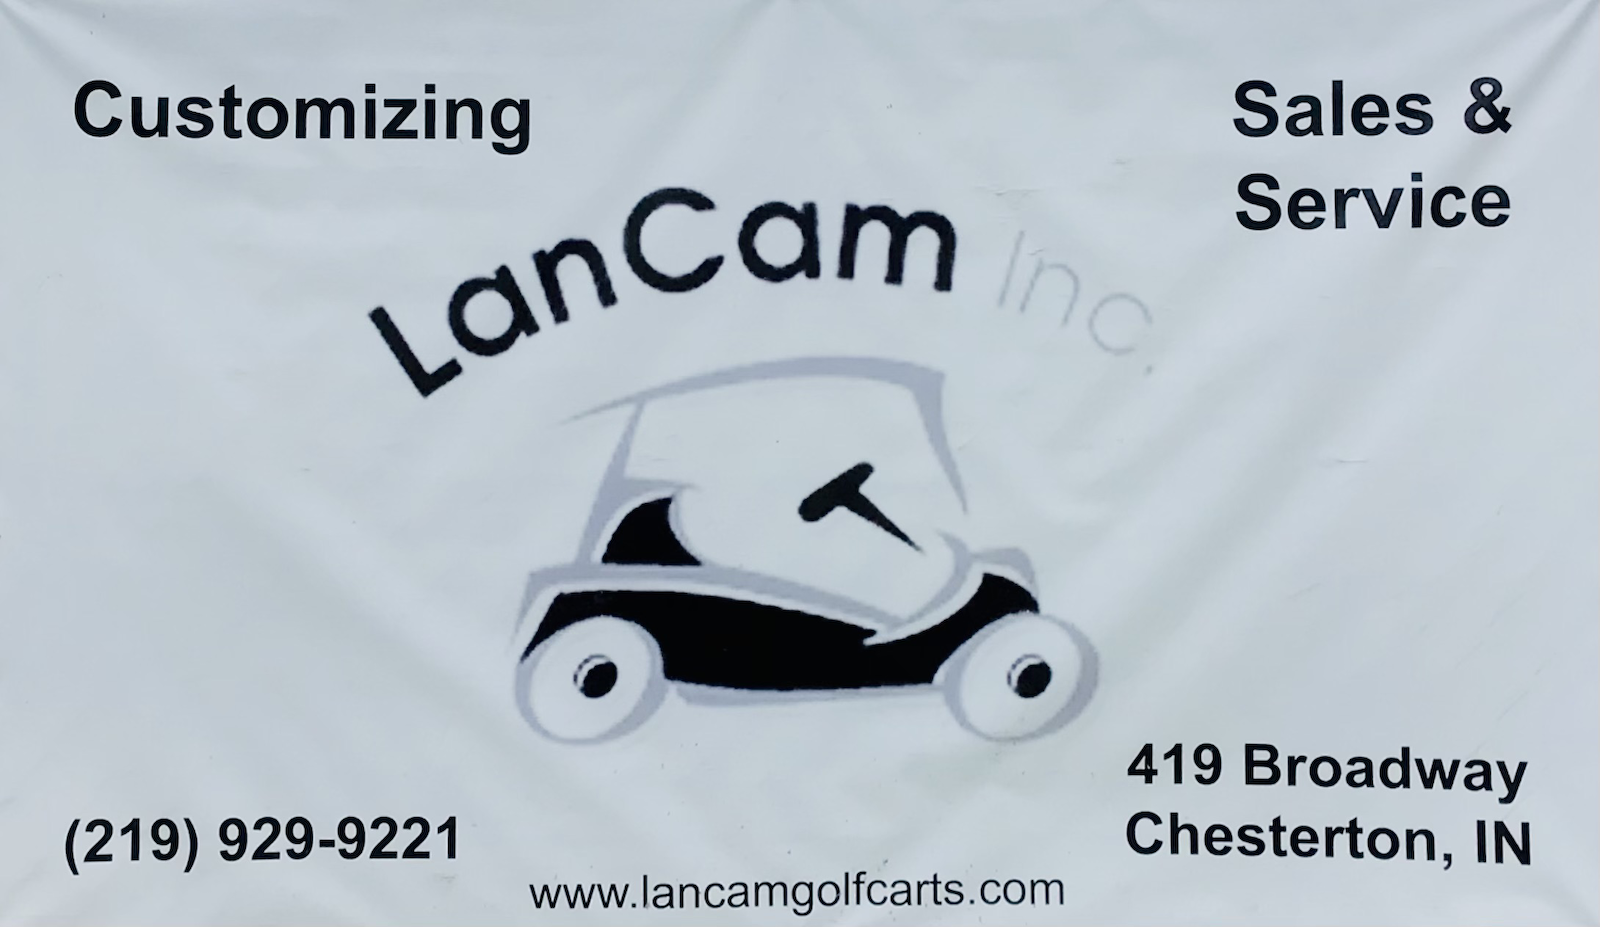 LanCam Golf carts